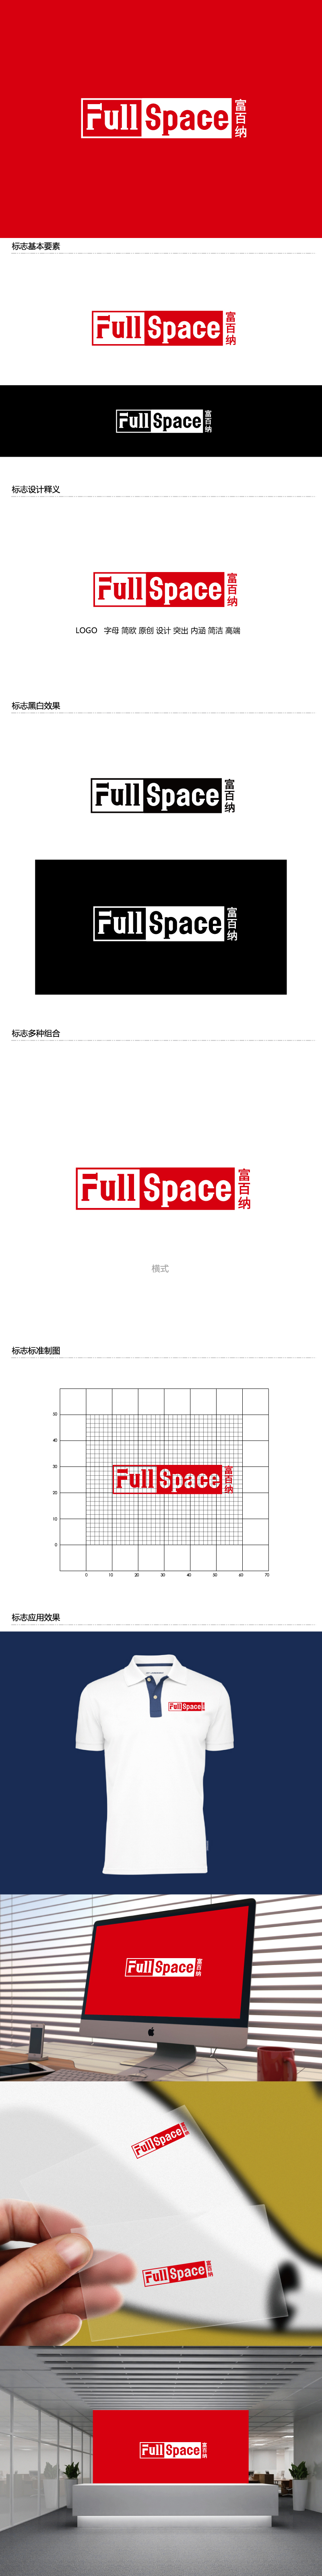 张俊的FullSpace富百纳logo设计